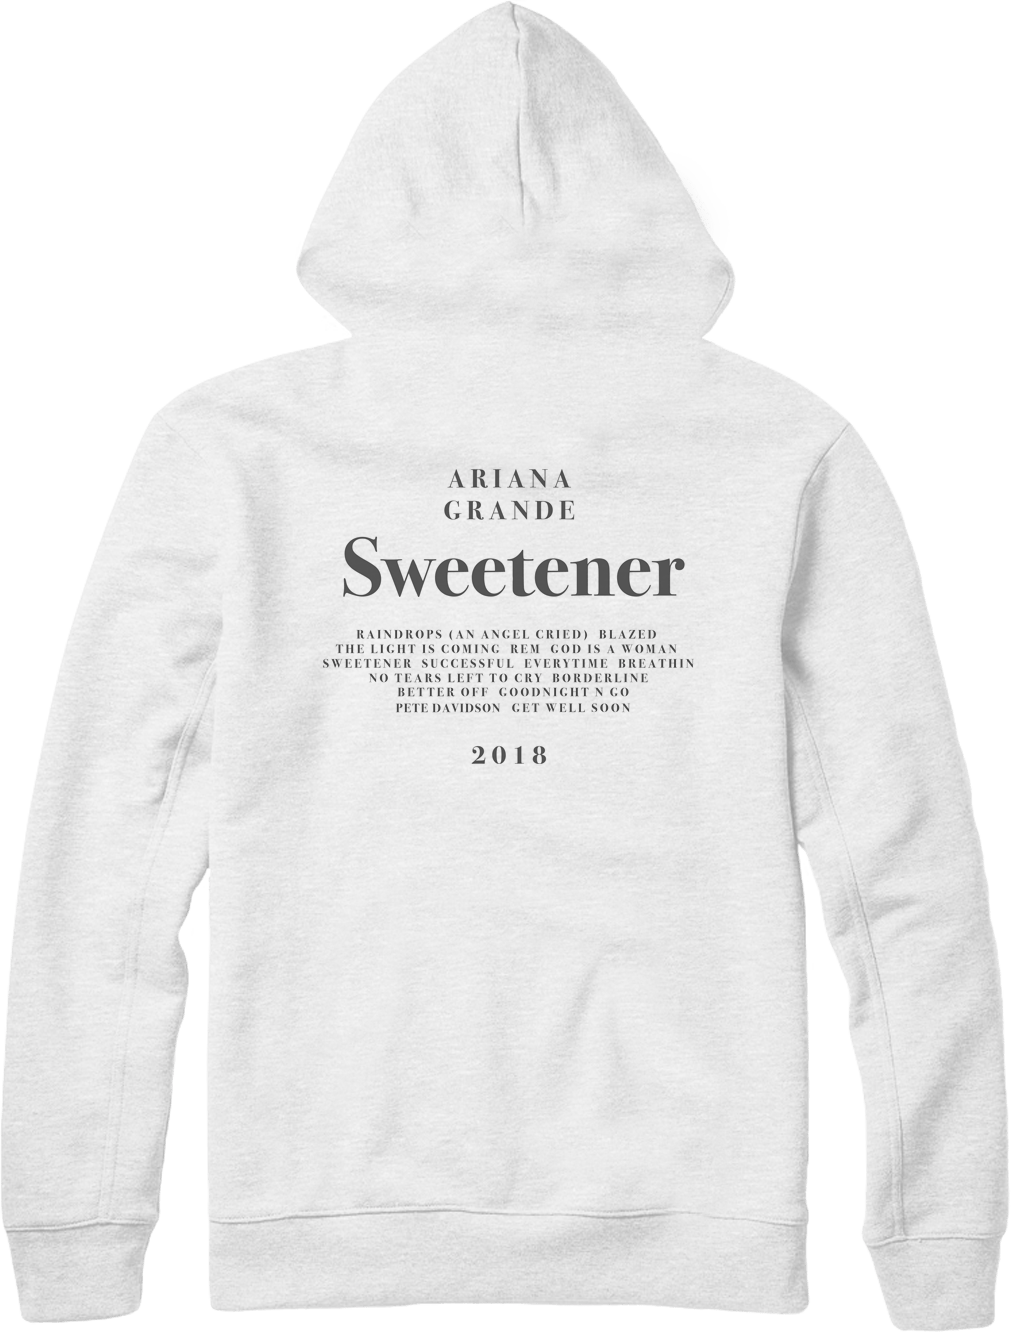 ariana grande sweetener pullover